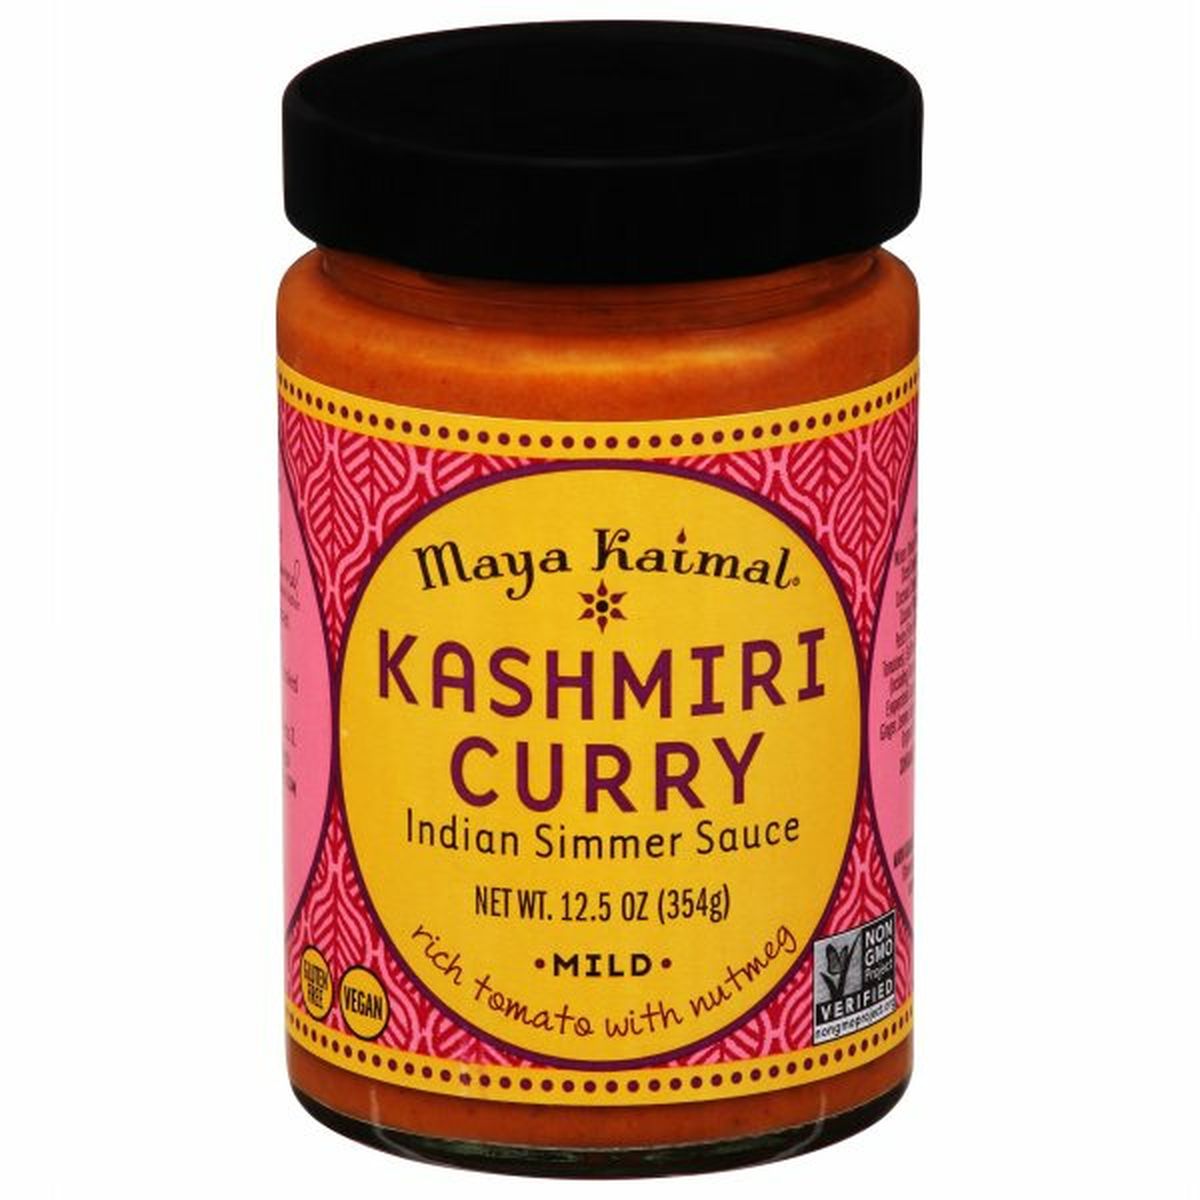 Calories in Maya Kaimal Indian Simmer Sauce, Kashmiri Curry, Mild